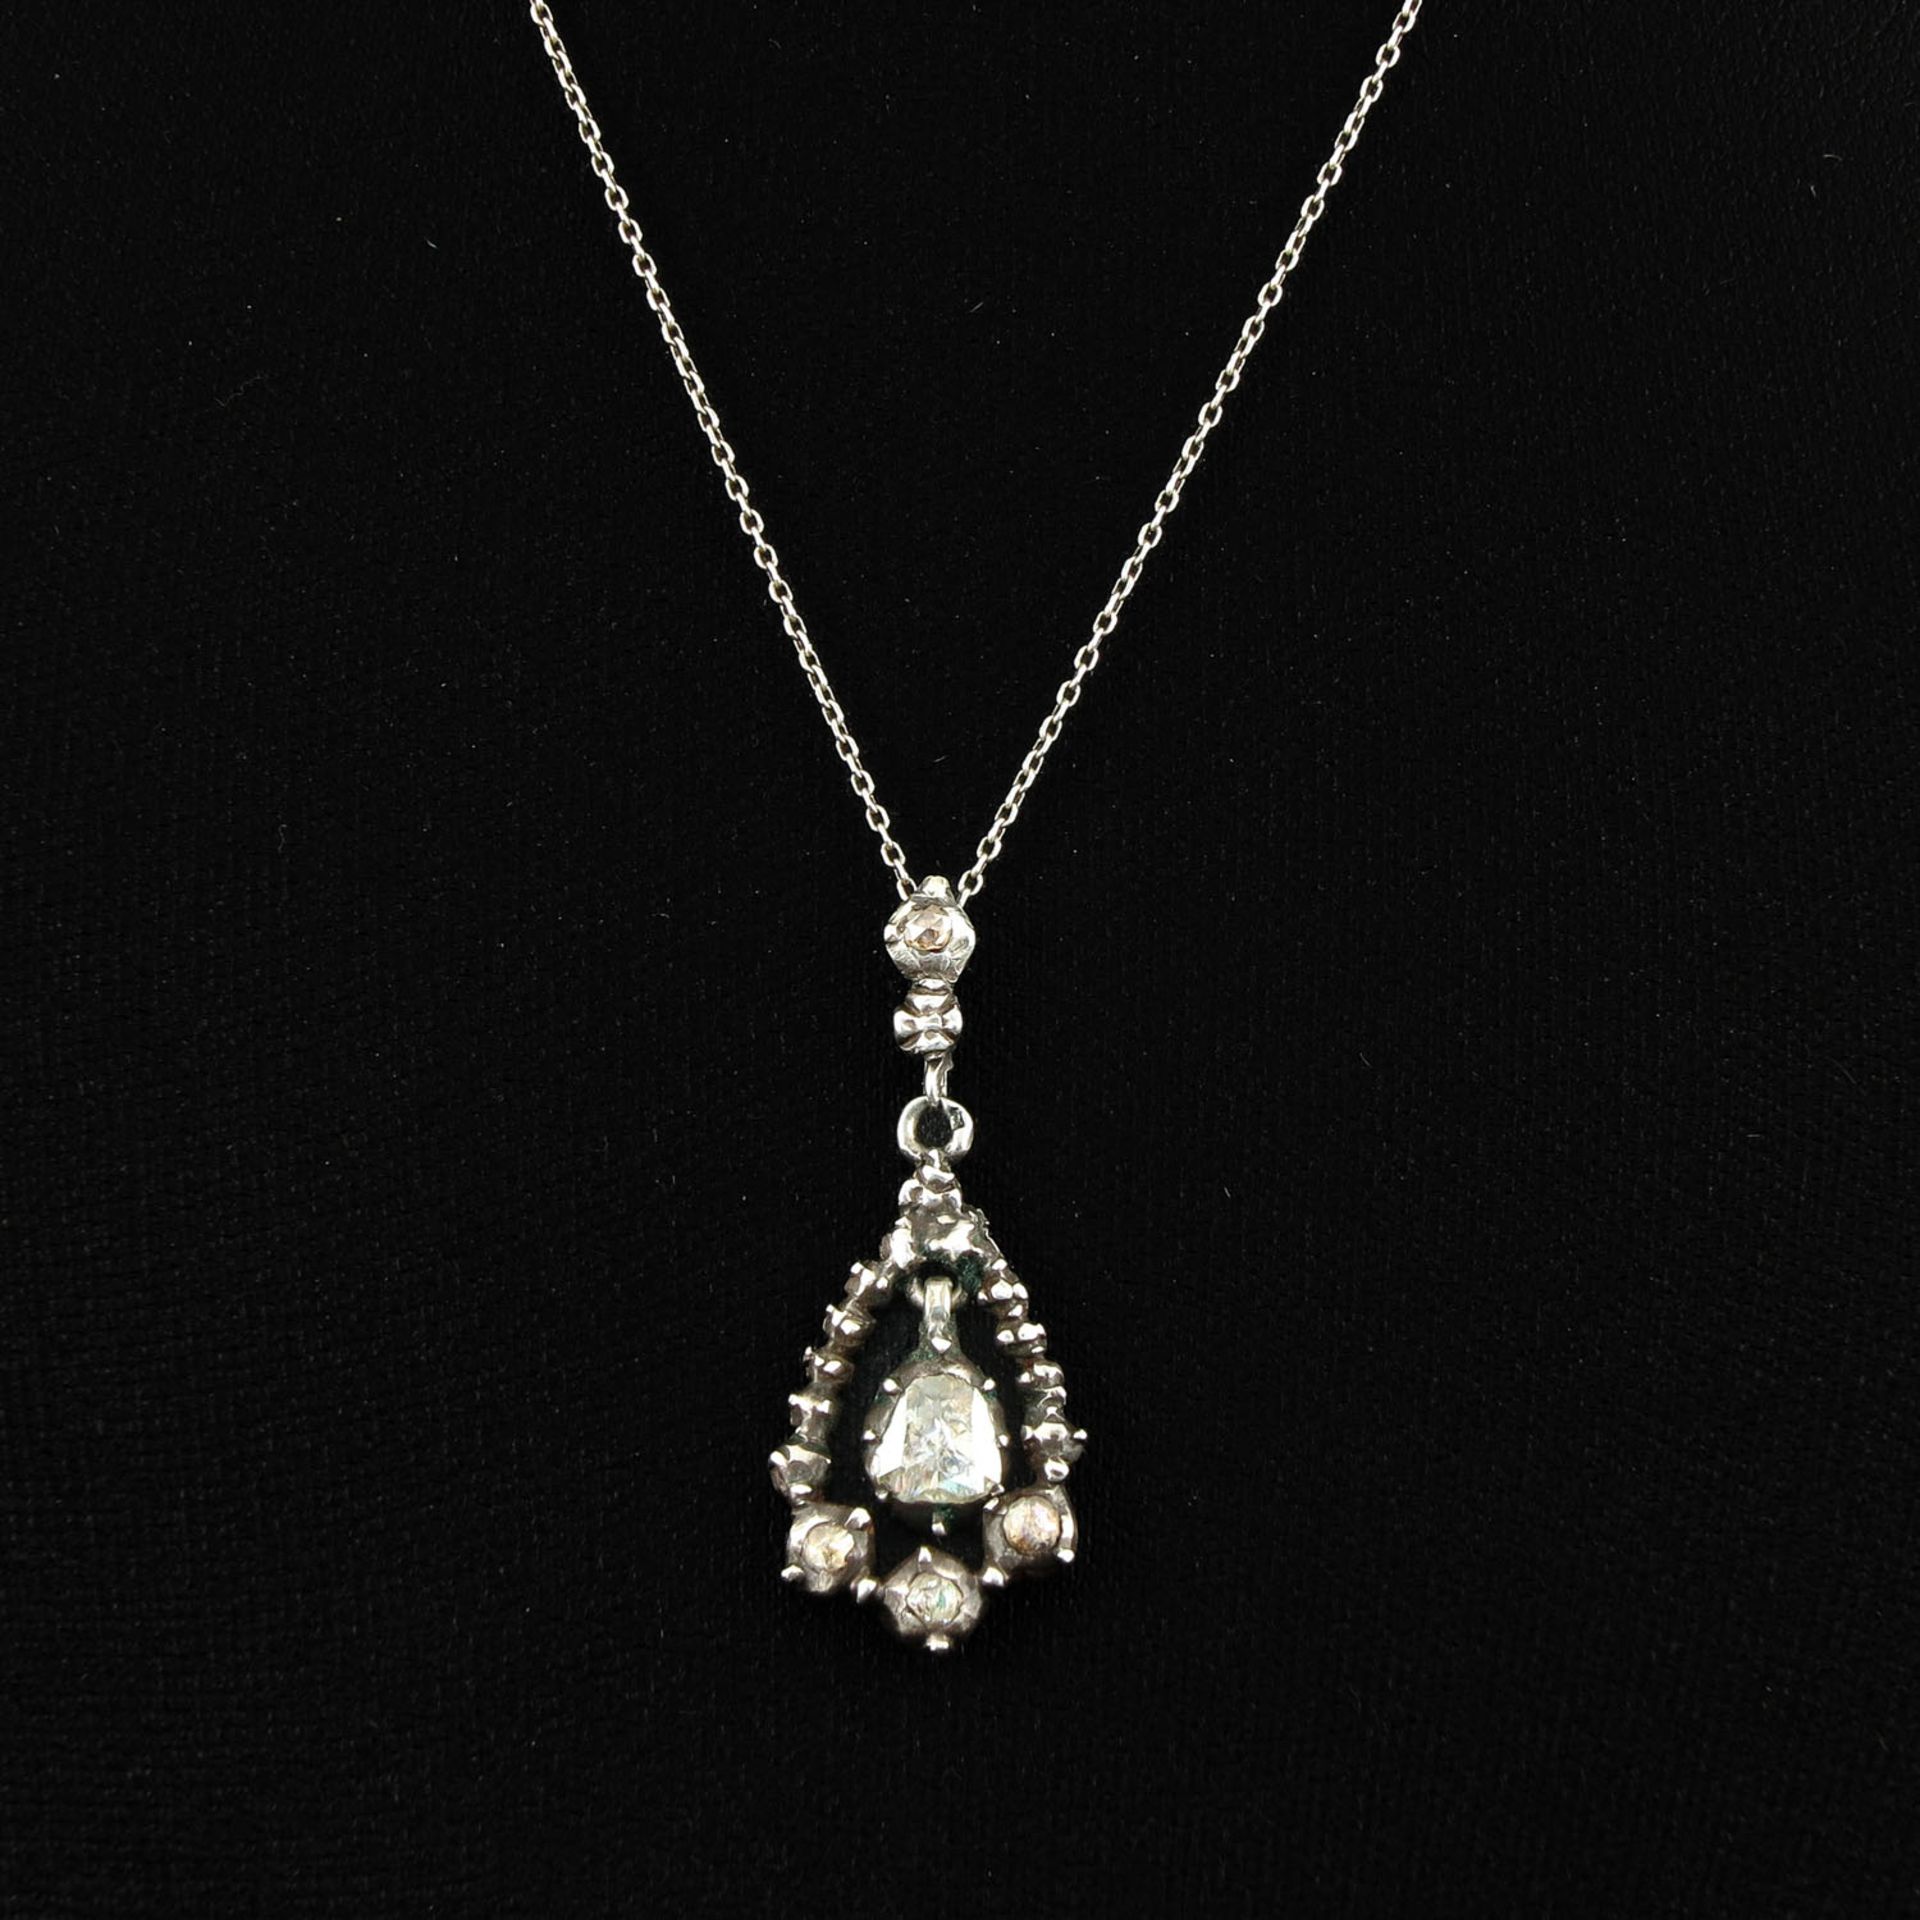 A Ladies 14KG Necklace with Diamond Pendant